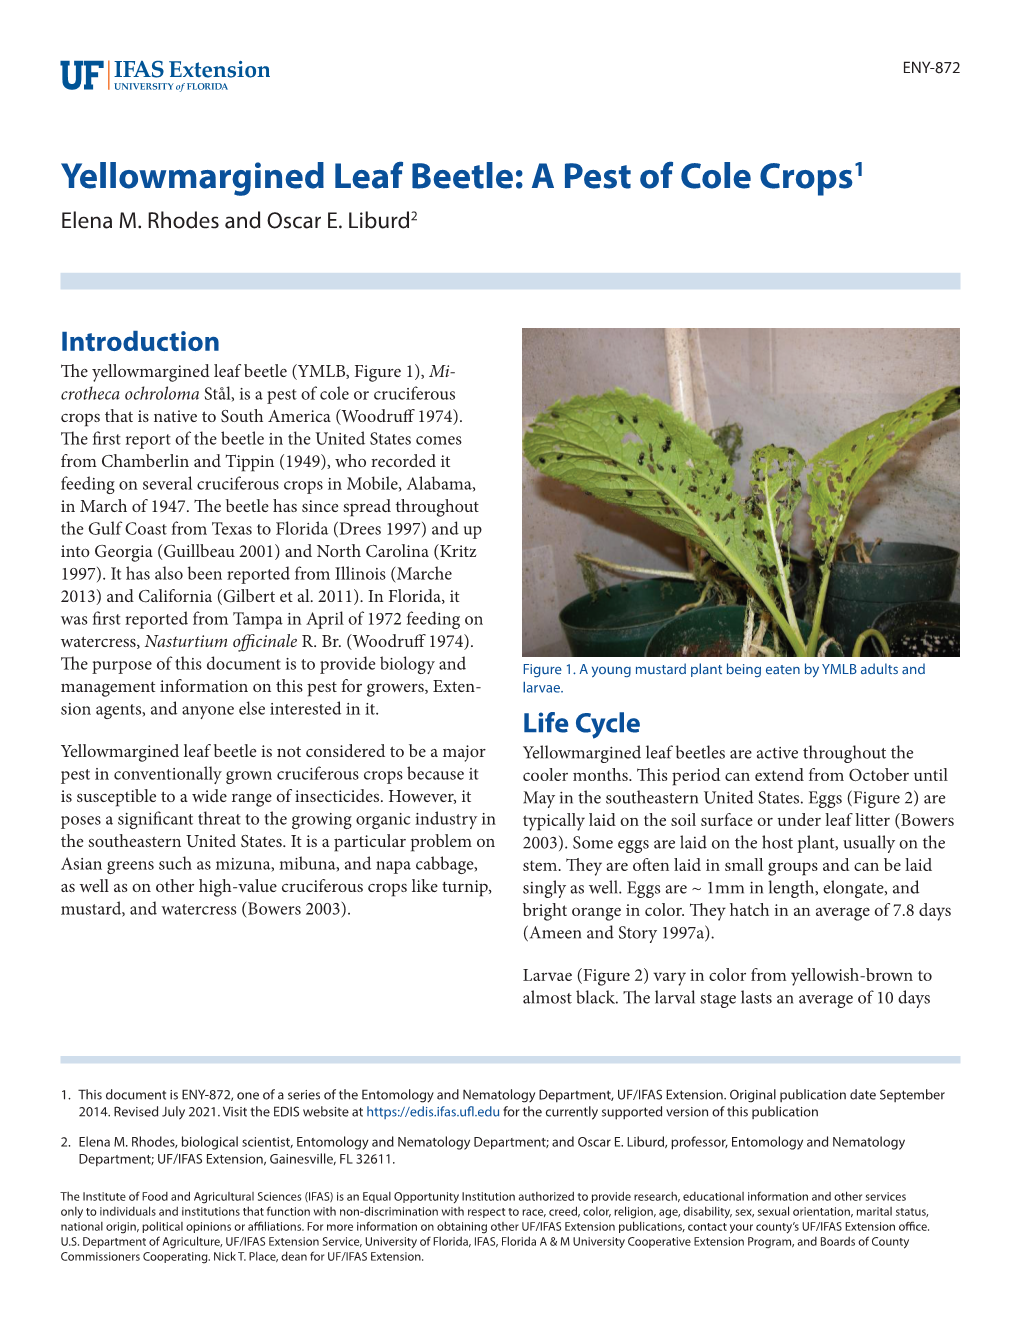 Yellowmargined Leaf Beetle: a Pest of Cole Crops1 Elena M